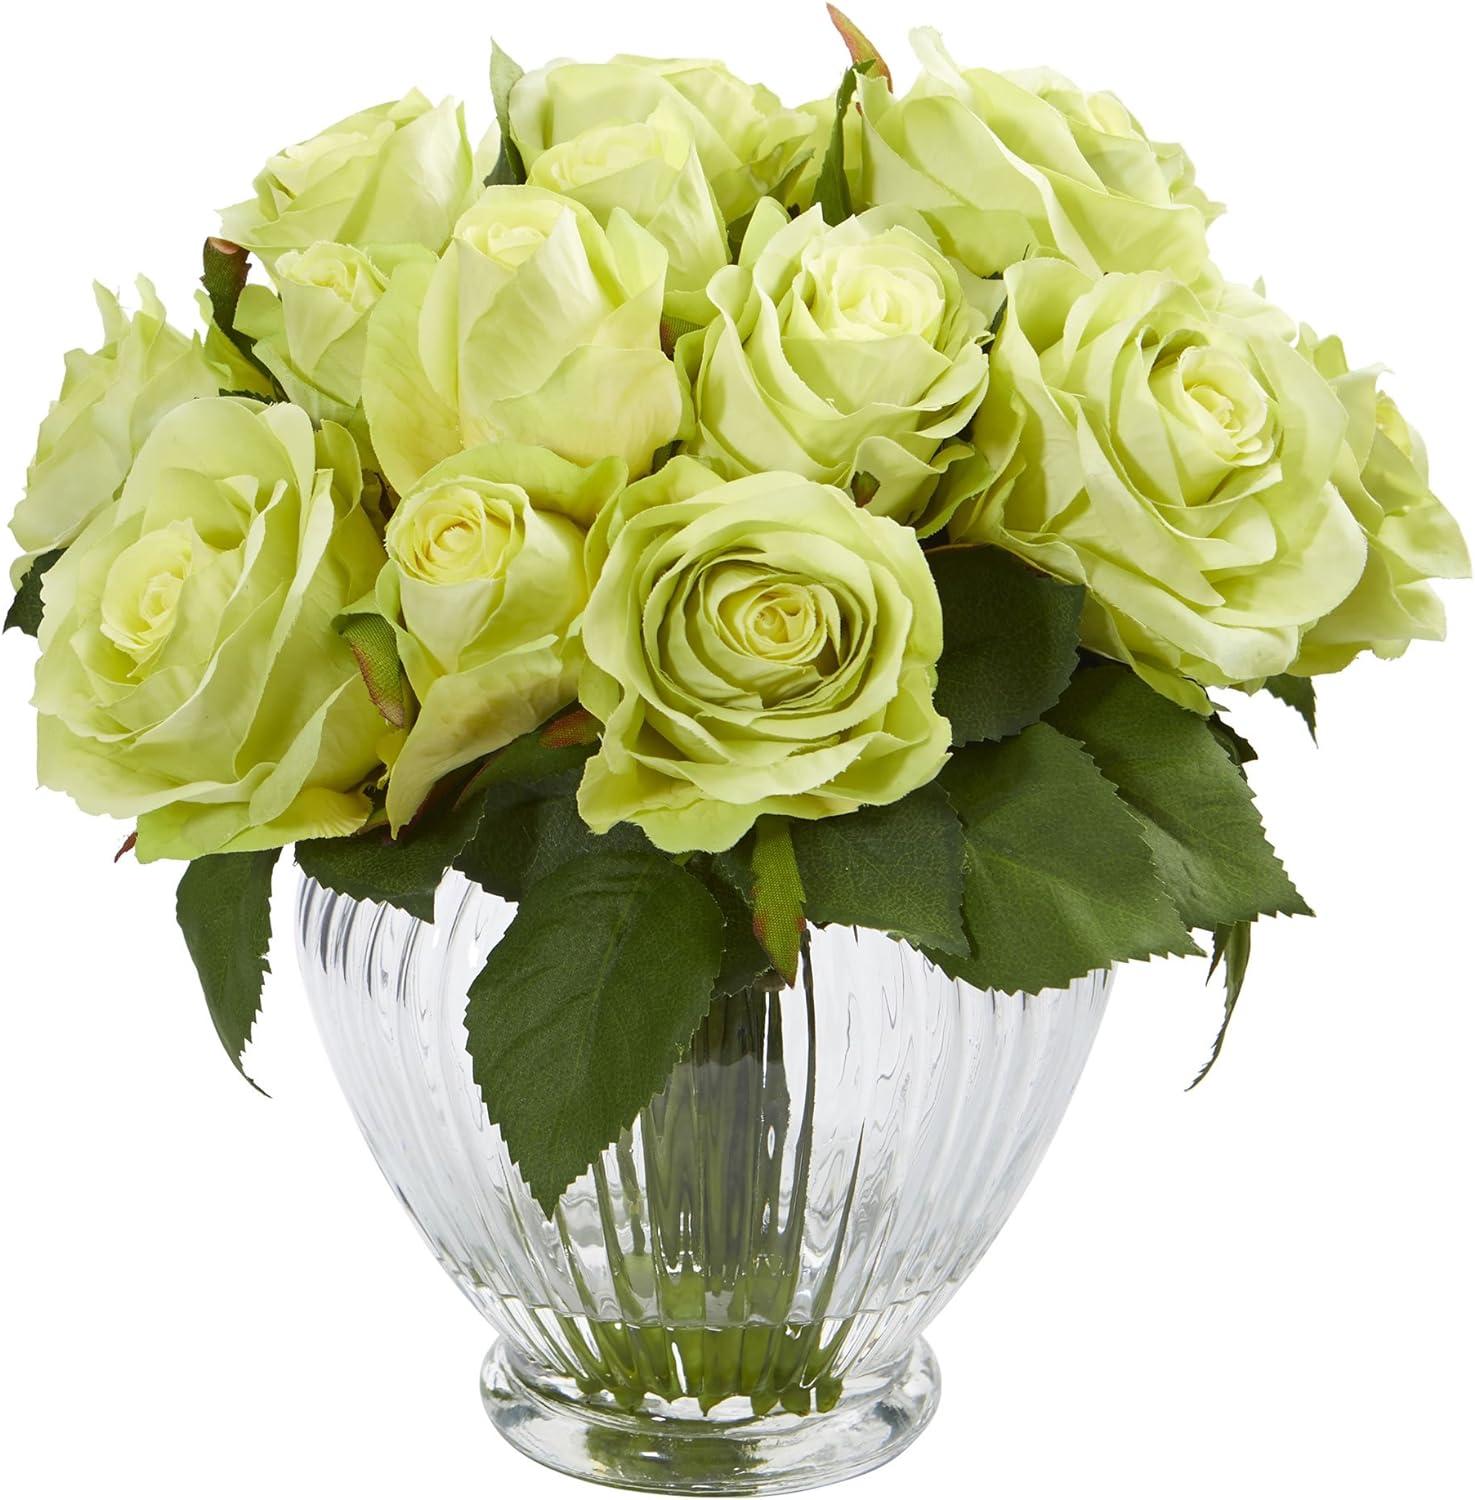 Romantic Rose 18" Faux Floral Arrangement in Pleated Glass Vase